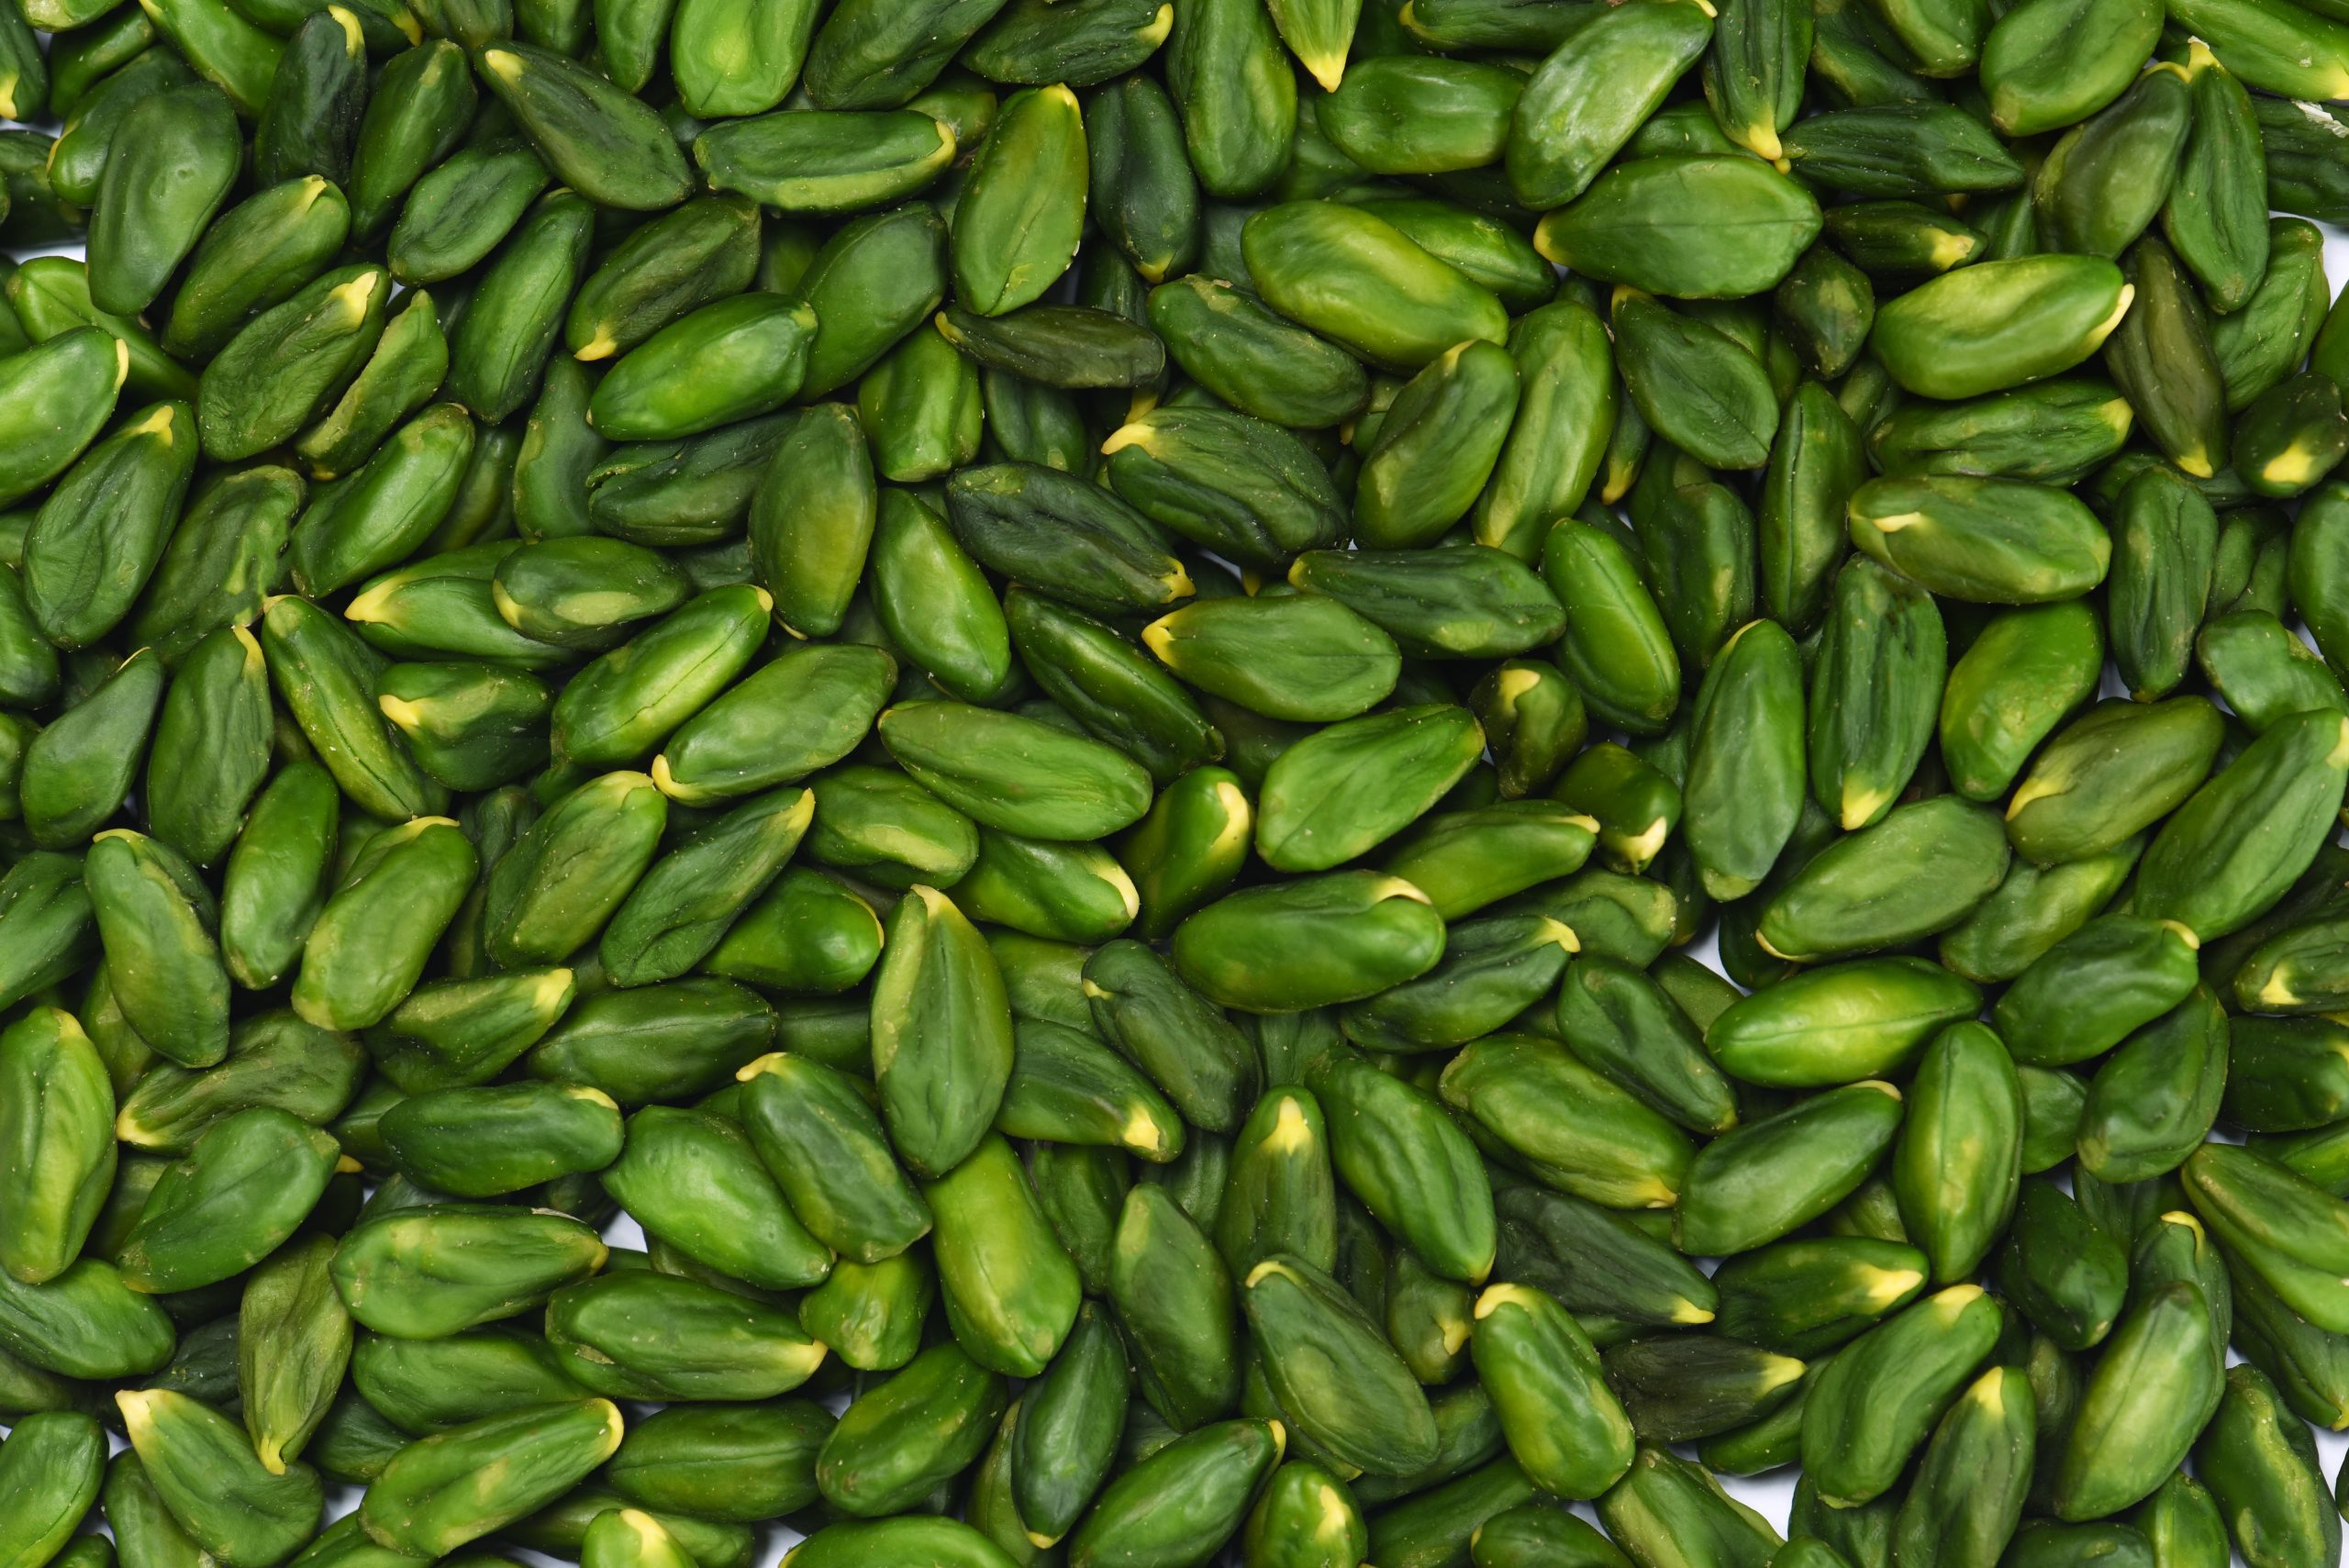 Supplier of peeled green pistachio kernels